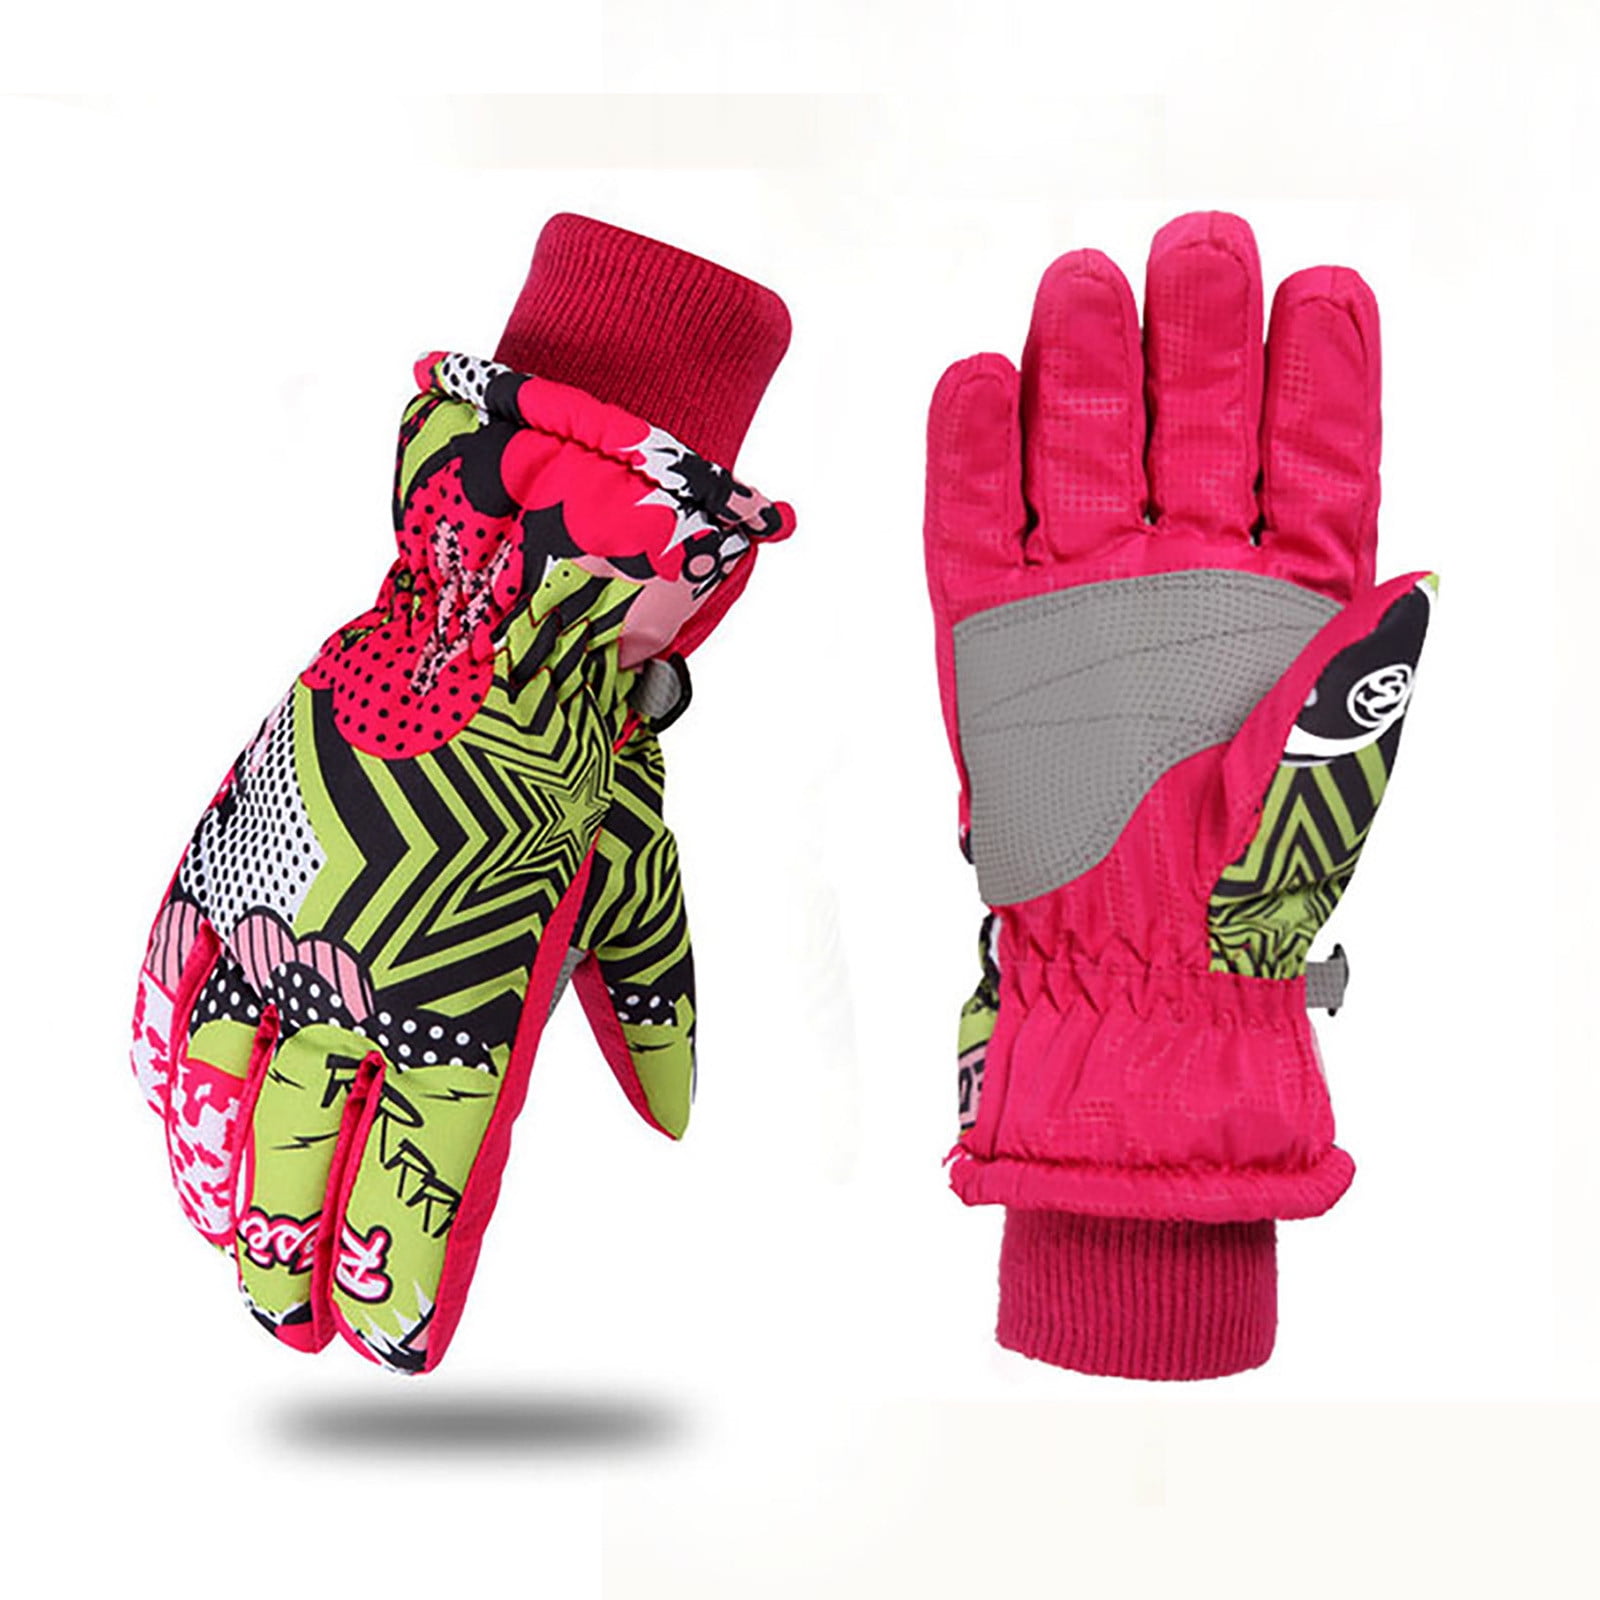 35℃ Waterproof Winter Ski Snow Snowboarding Thermal Thinsulate Gloves Women 